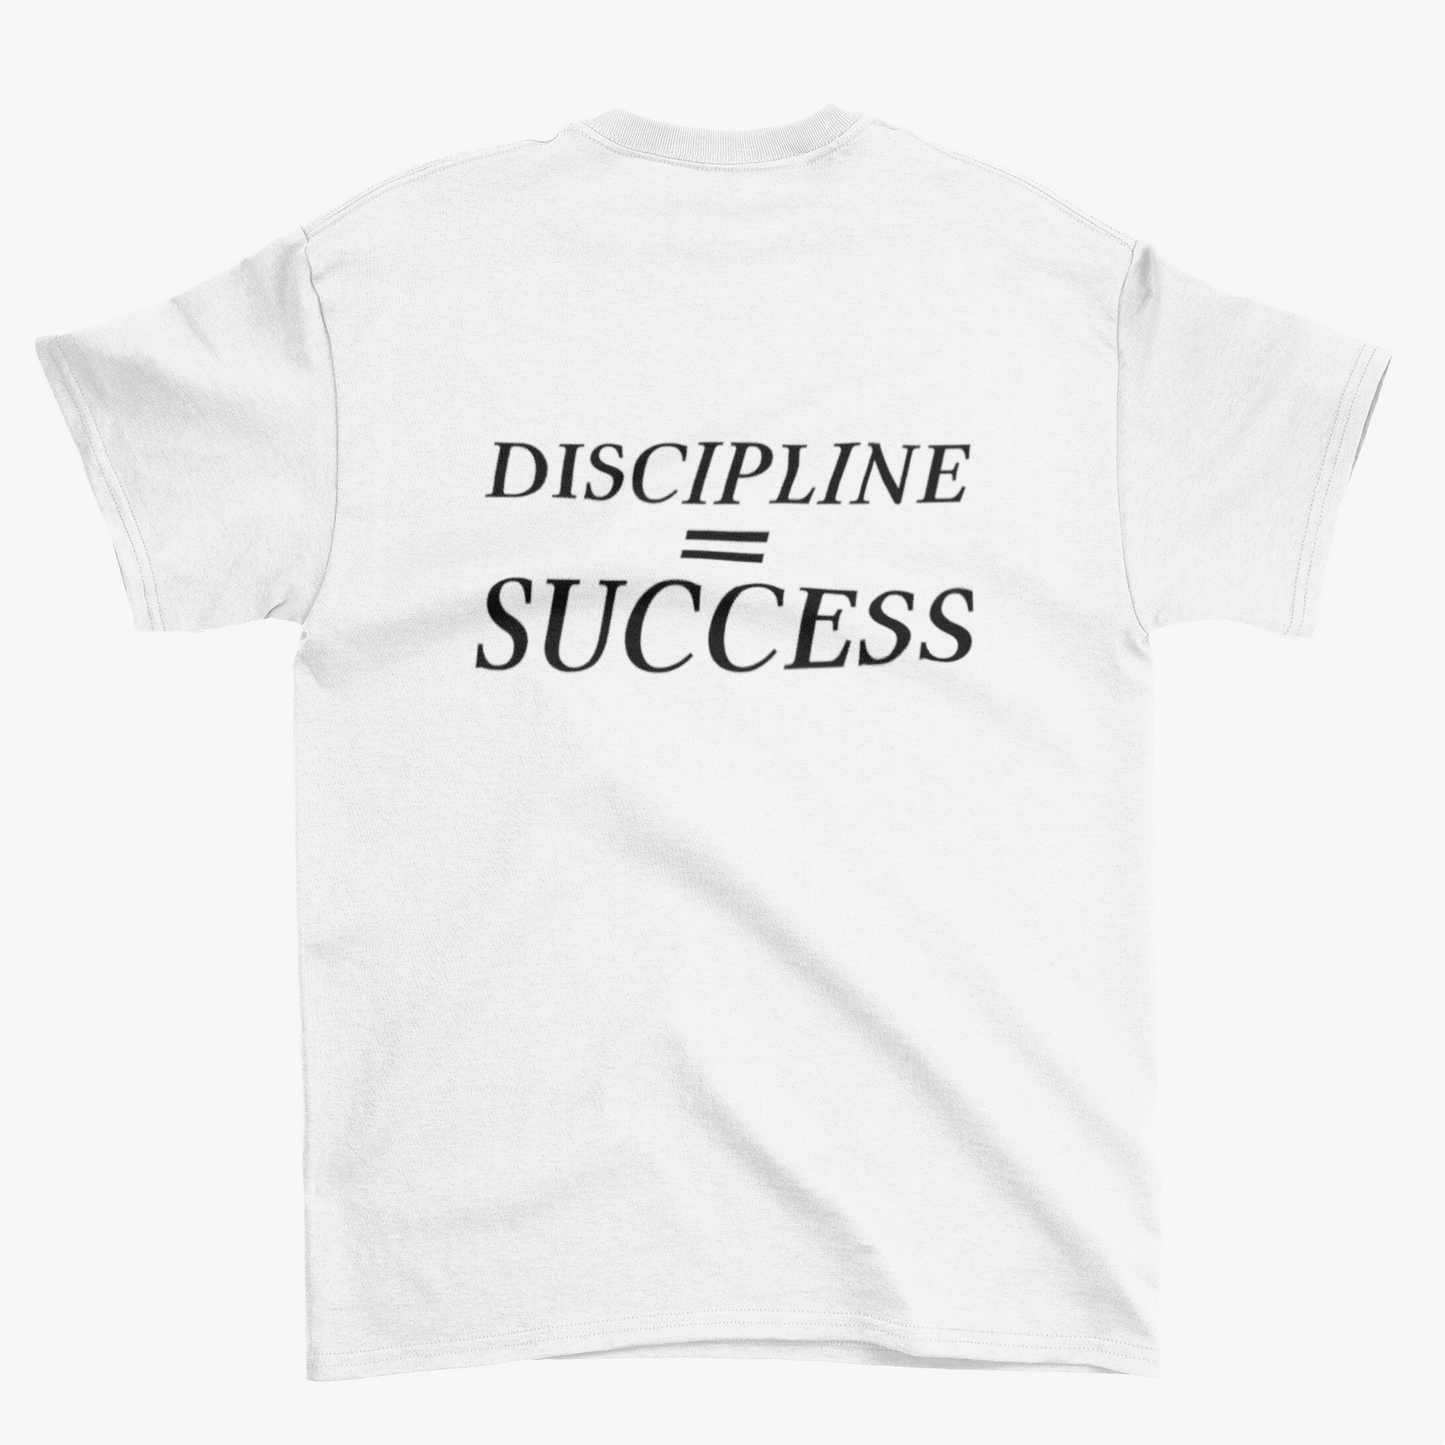 TMF Branded Discipline = Success Graphic T-Shirt